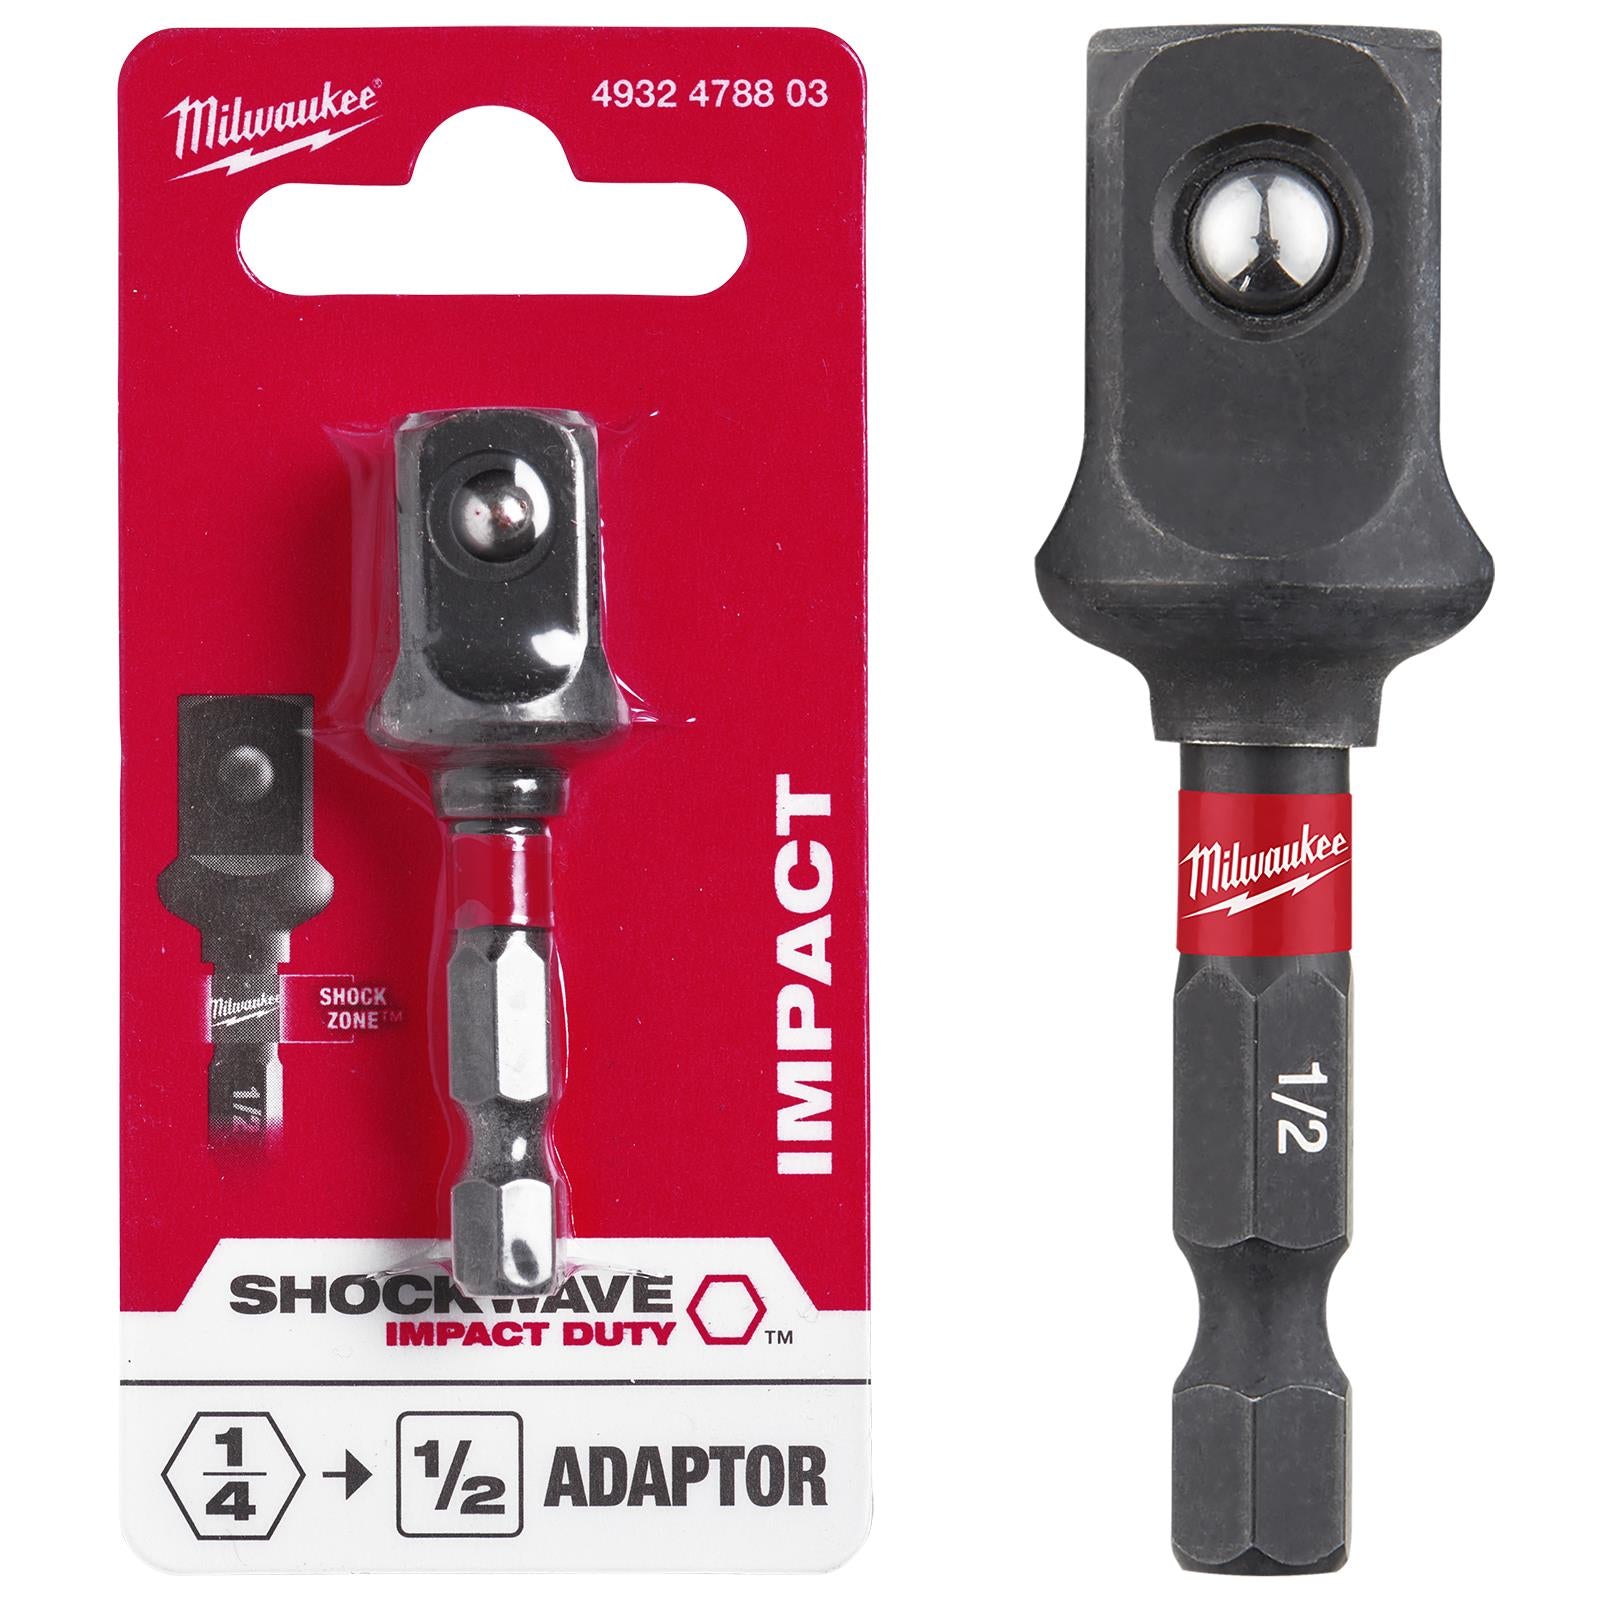 Milwaukee Impact Socket Adaptor 1/4" Hex to 1/2" Square Drive SHOCKWAVE Impact Duty